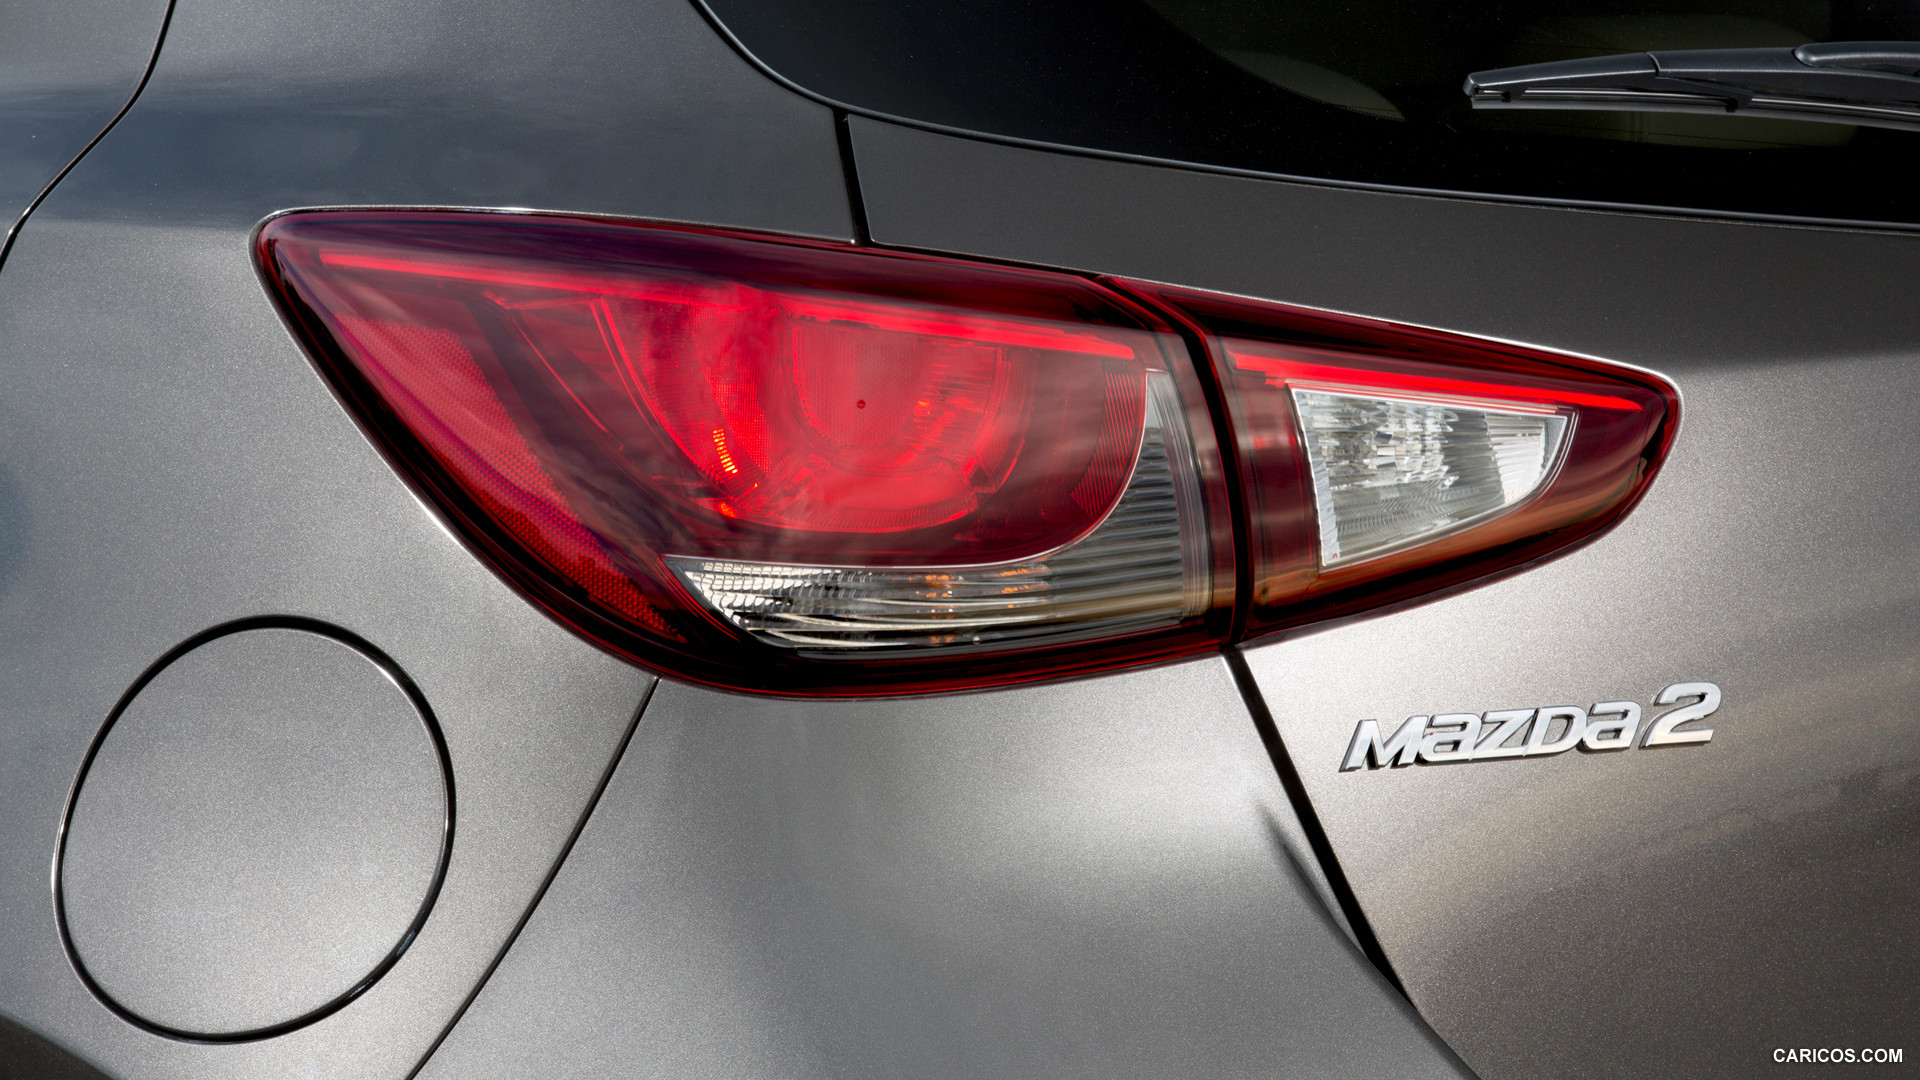 2016 Mazda2  - Tail Light, #161 of 340